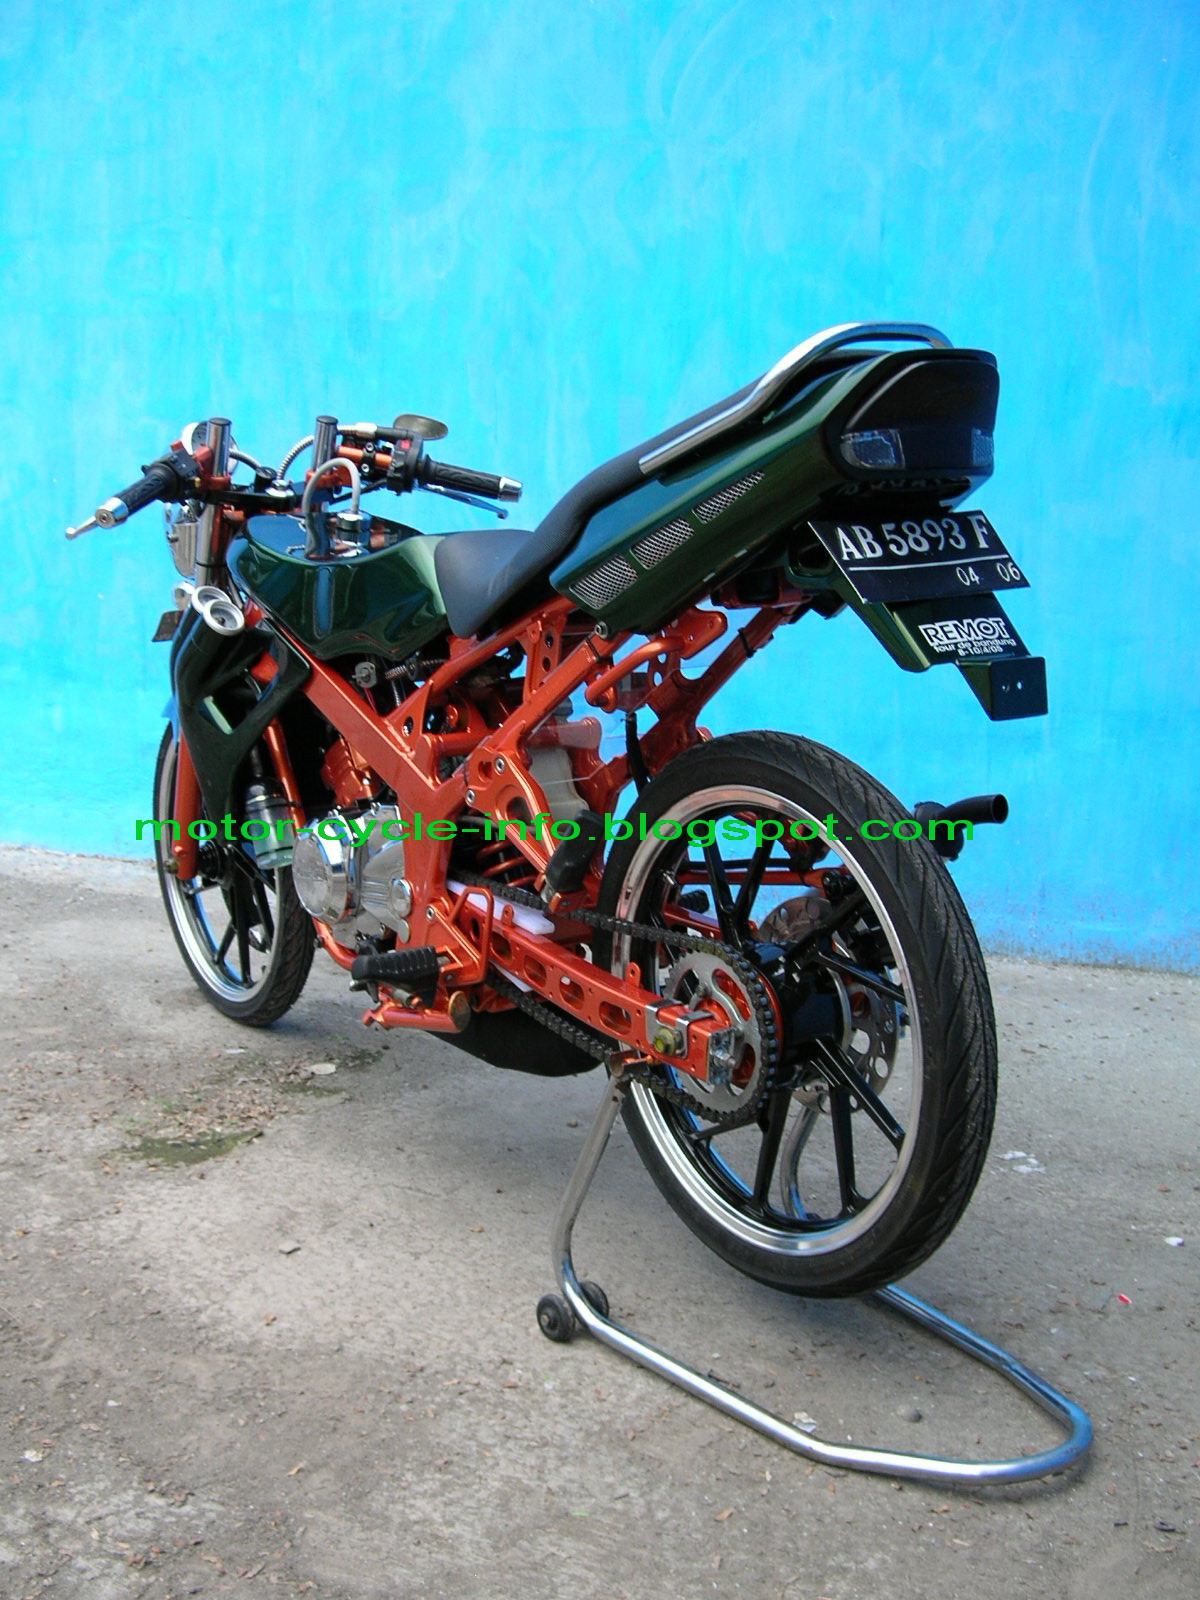 wallpaper motor ninja,land vehicle,vehicle,motor vehicle,motorcycle,spoke